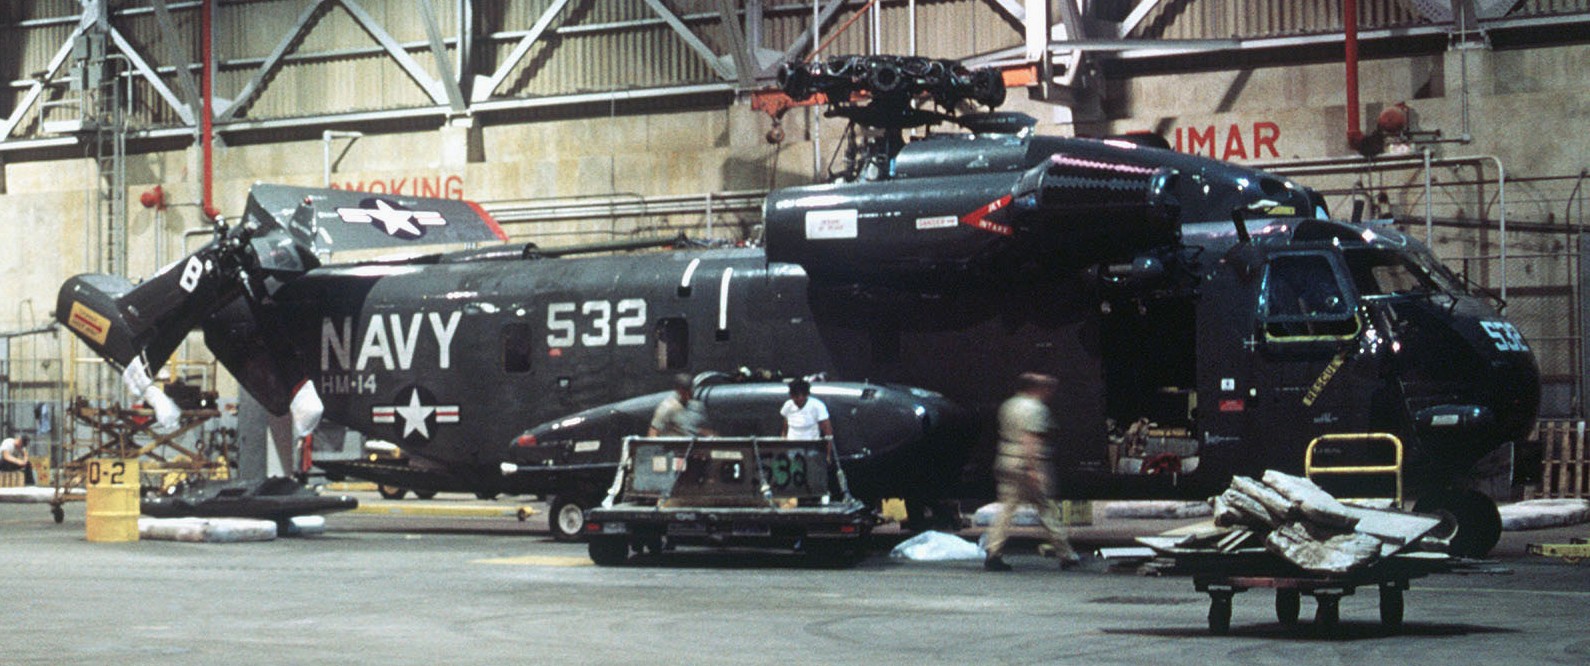 hm-14 vanguard helicopter mine countermeasures squadron navy rh-53d sea stallion 78